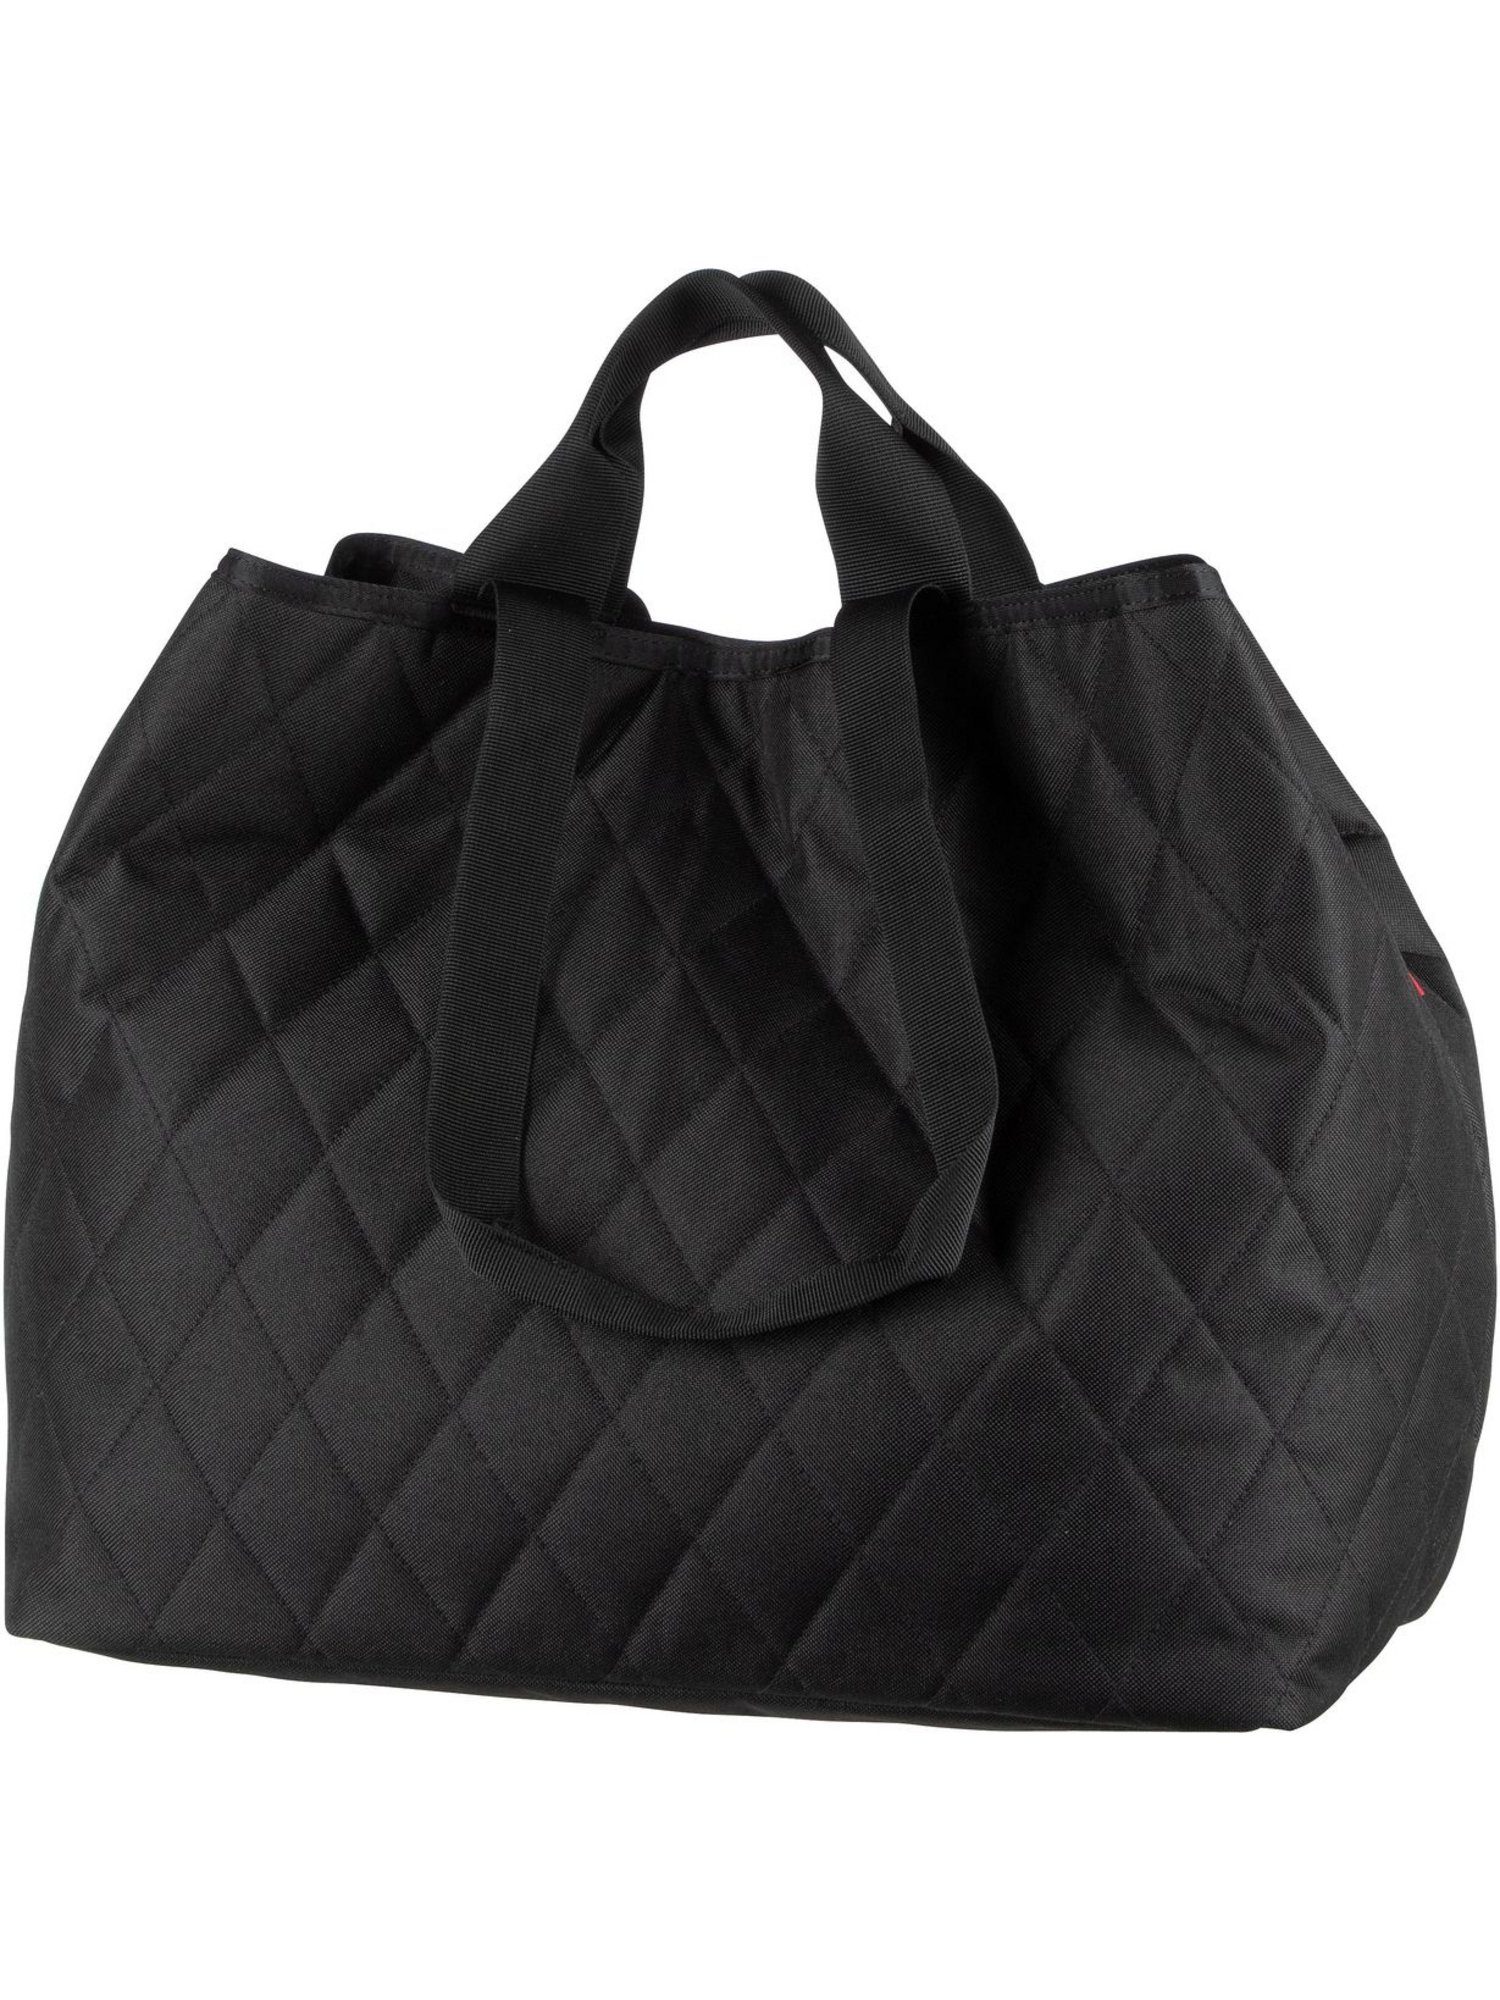 REISENTHEL® Shopper classic shopper XL Black Rhombus